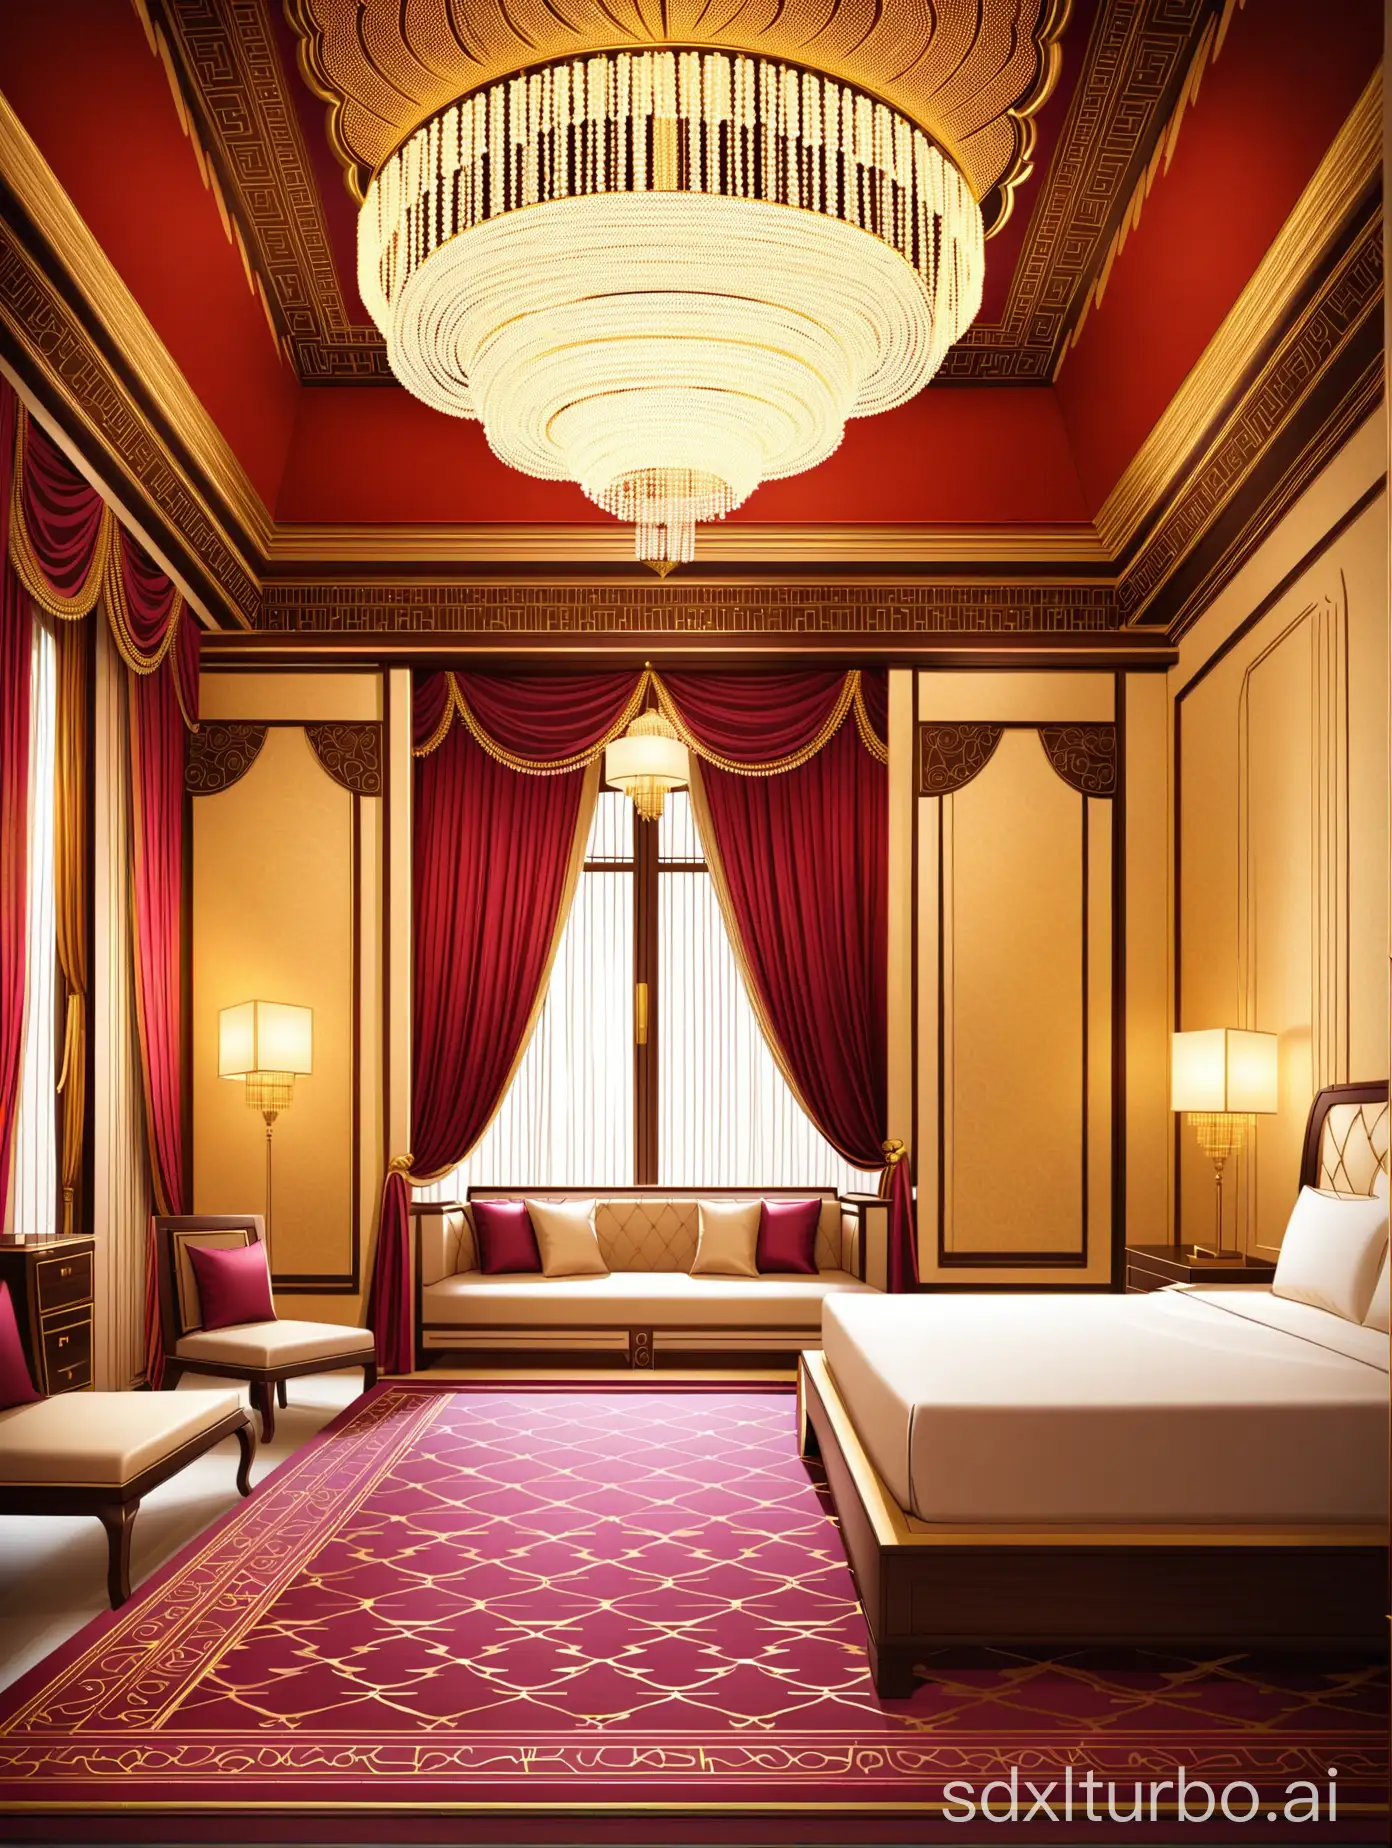 Opulent-Palace-Bedroom-with-Lavish-Decorations